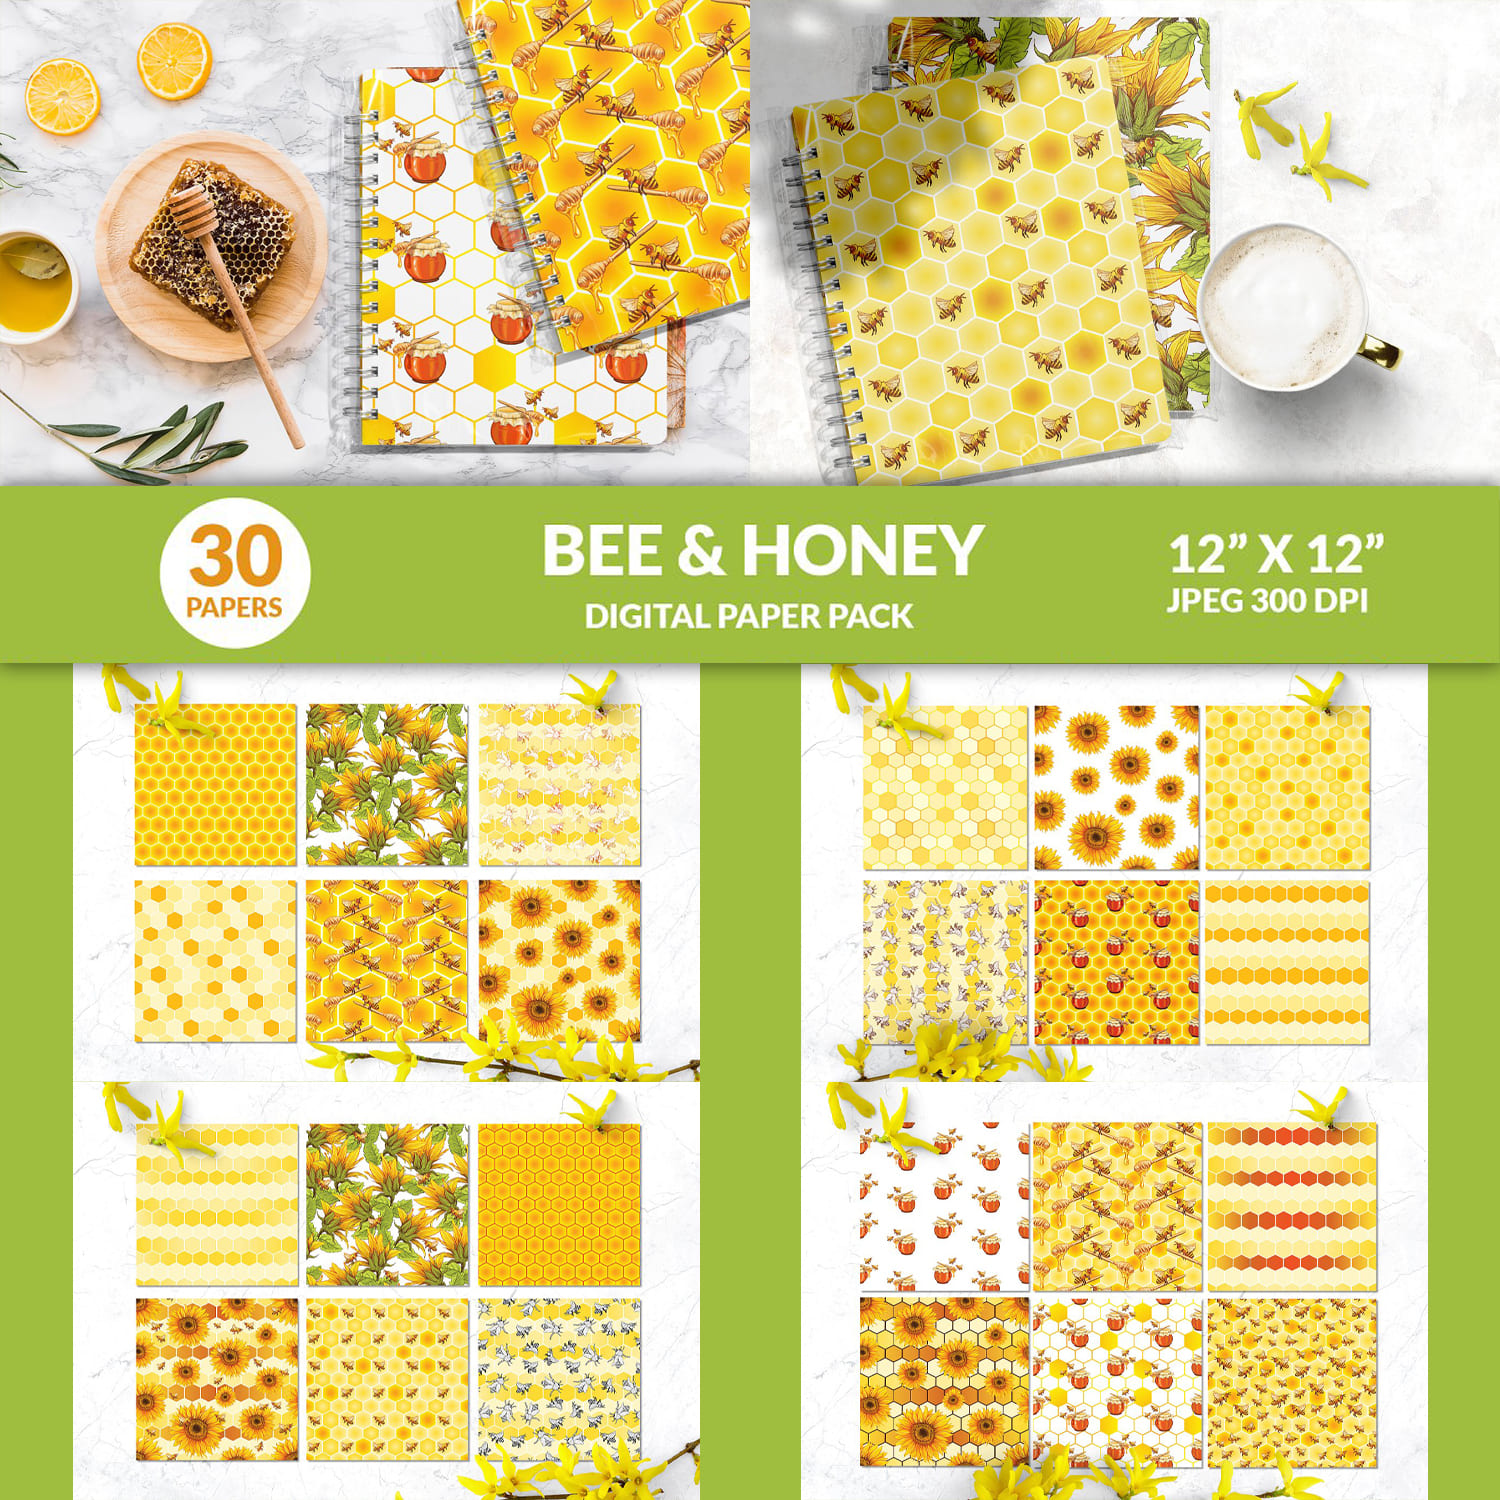 Bee honey digital paper pack - main image preview.